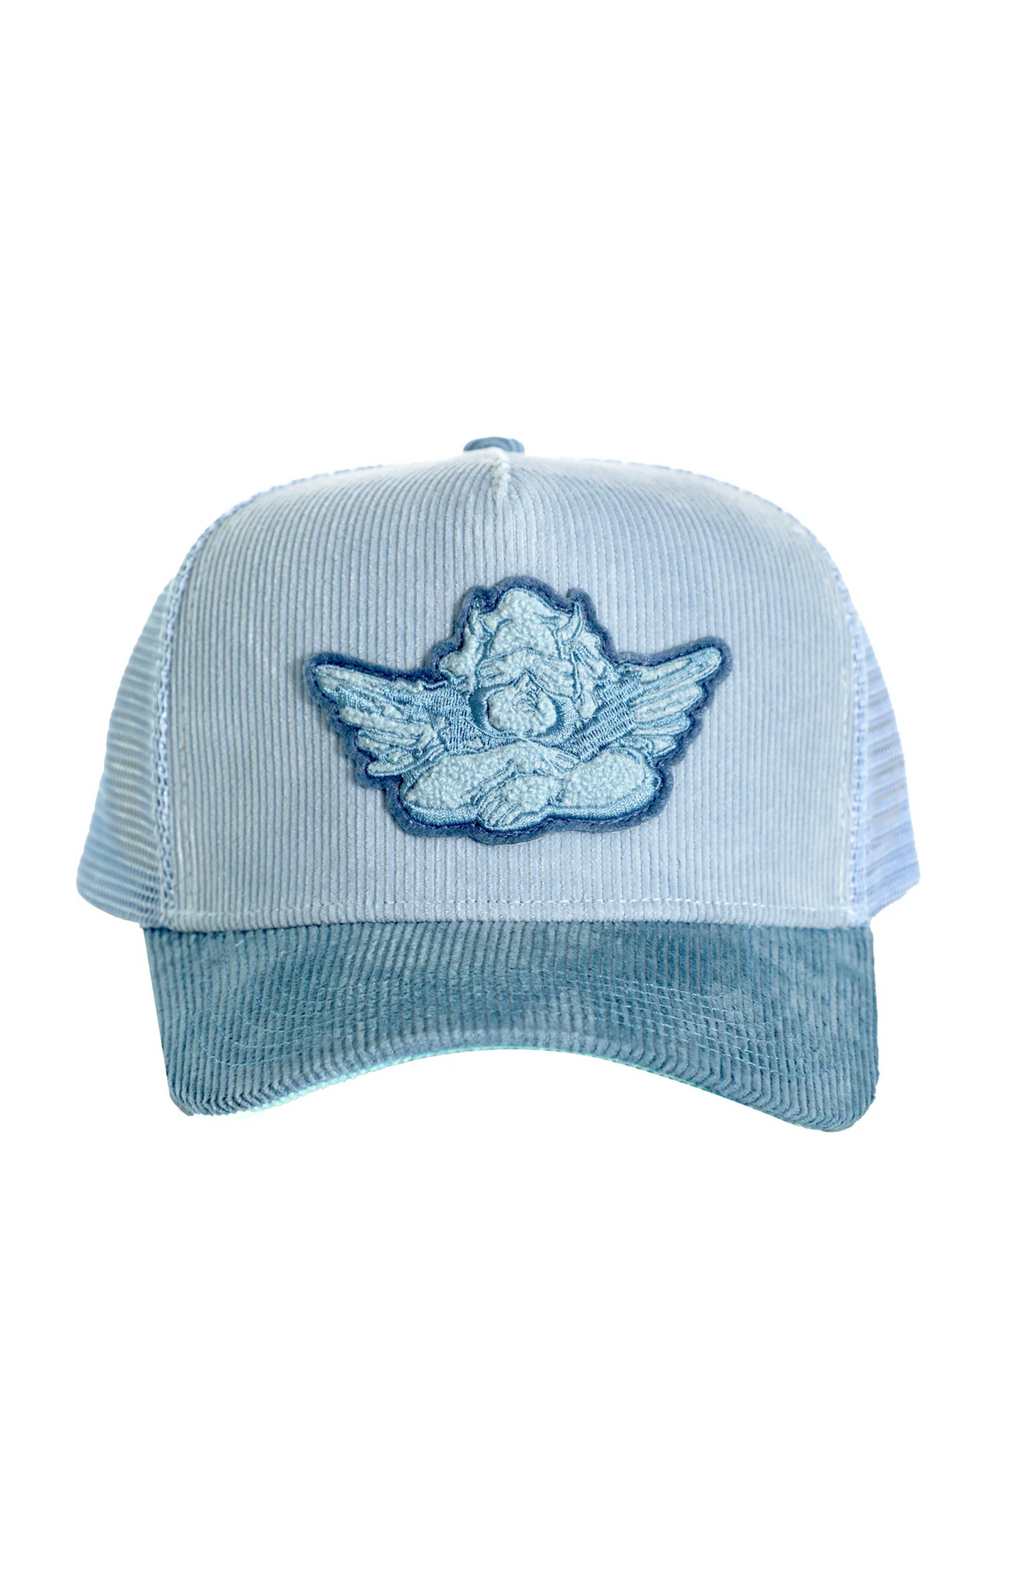 Boys Lie - Summer Blues Corduroy Trucker Hat